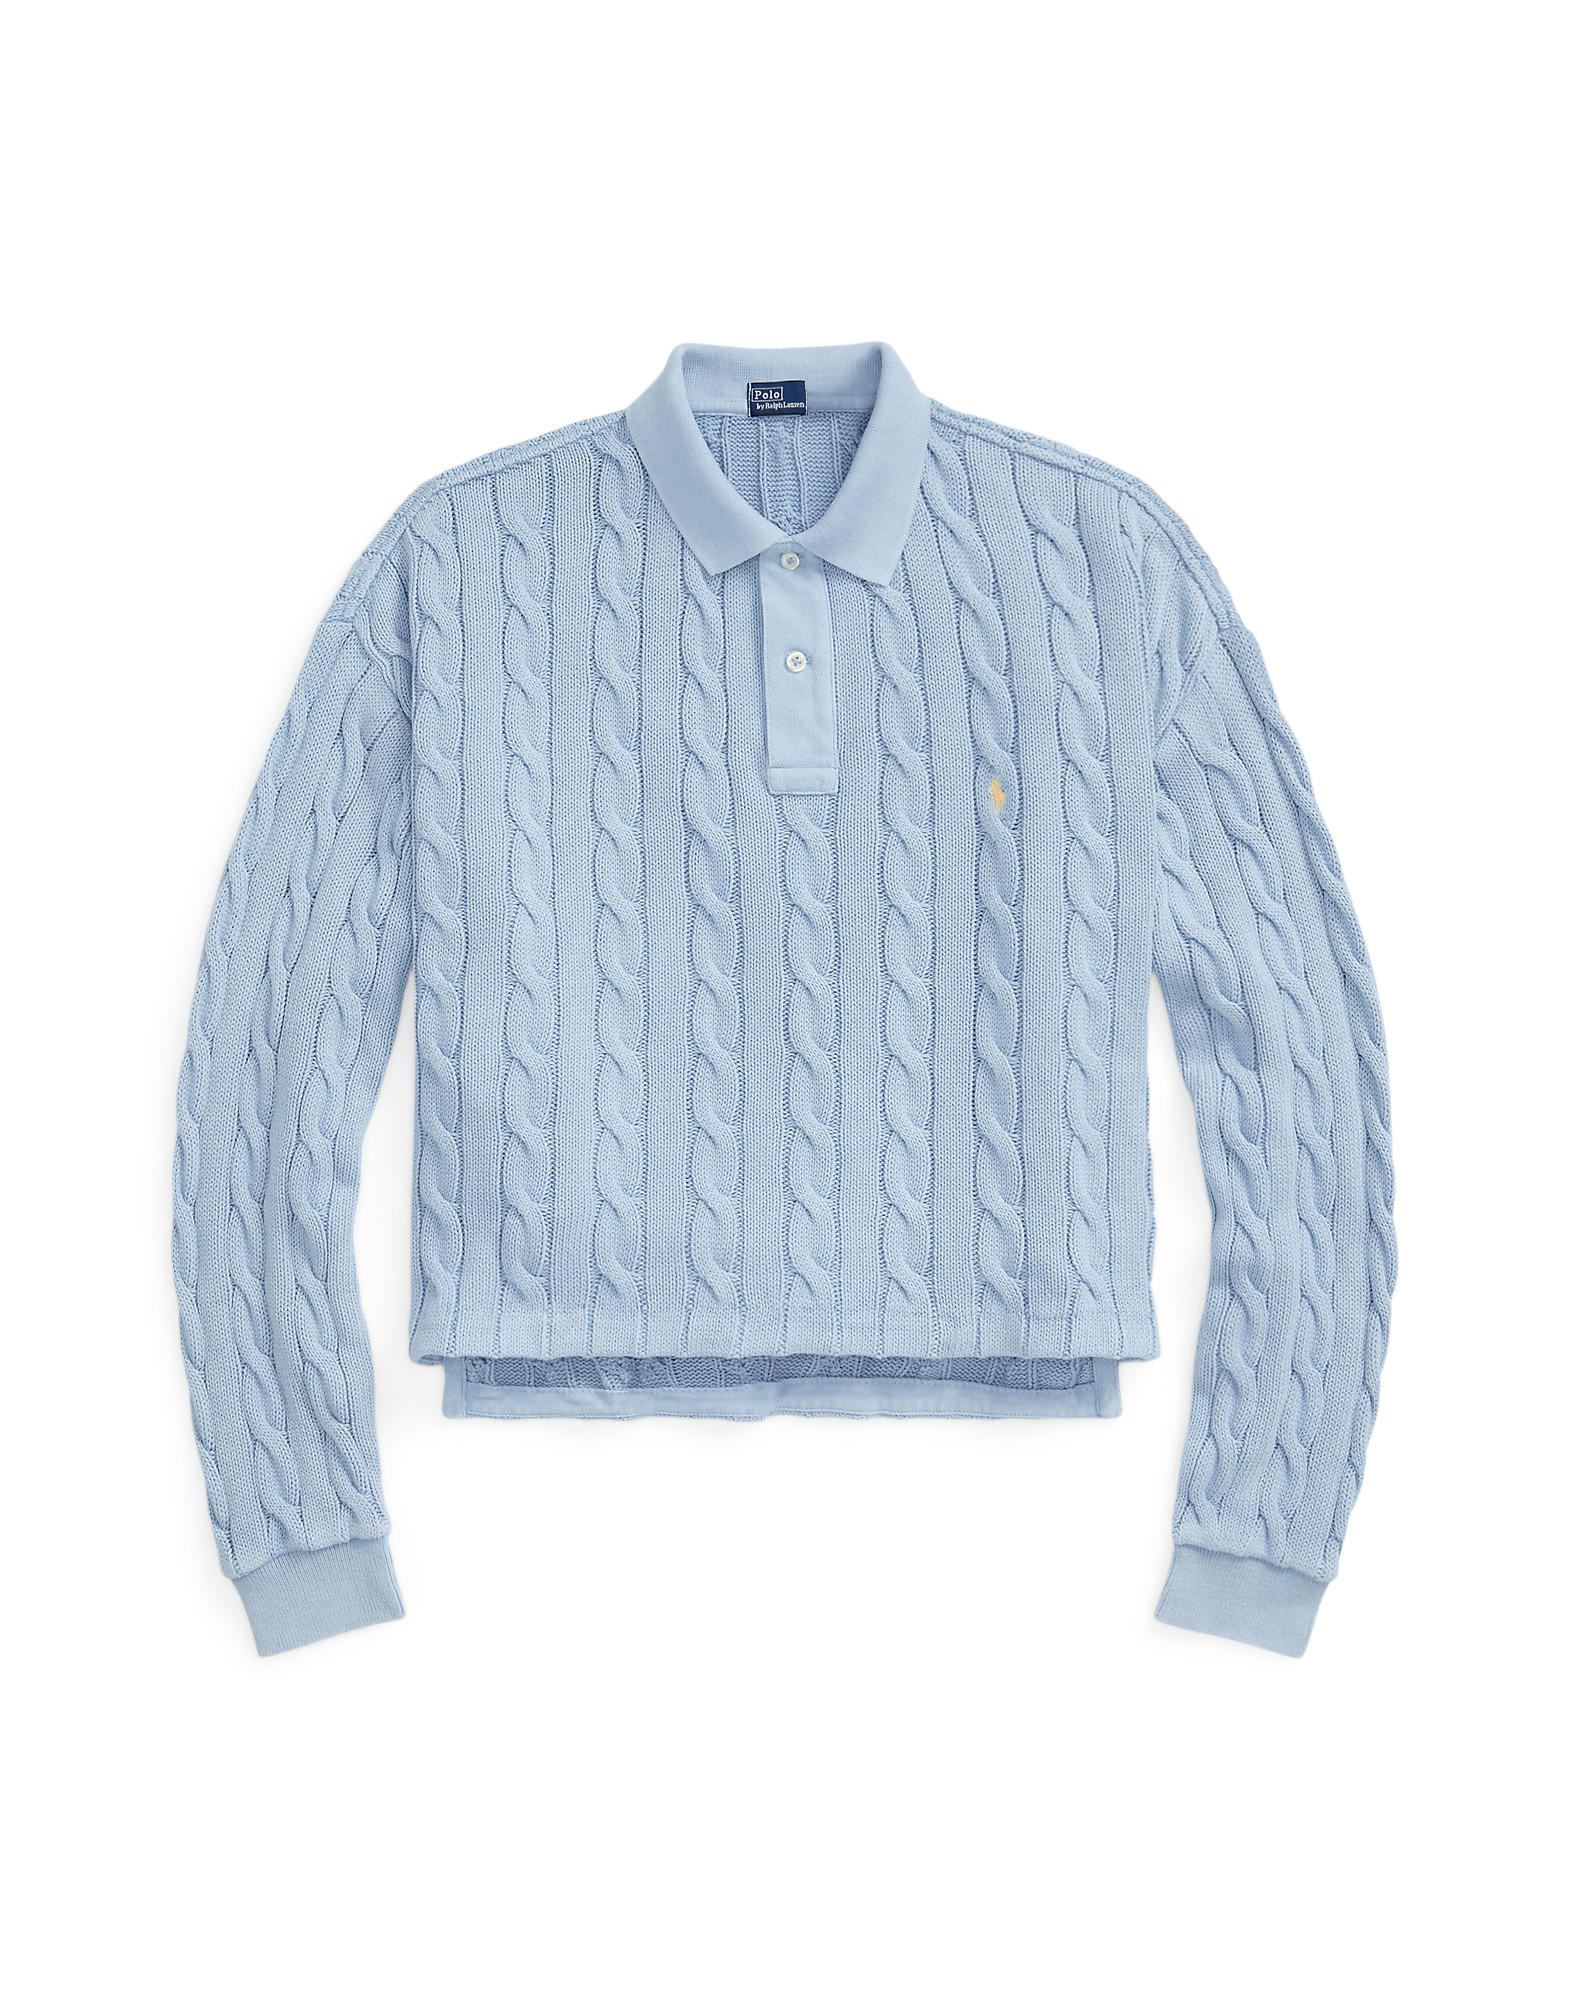 Polo Ralph Lauren Cotton Polo Shirt - Grey - L